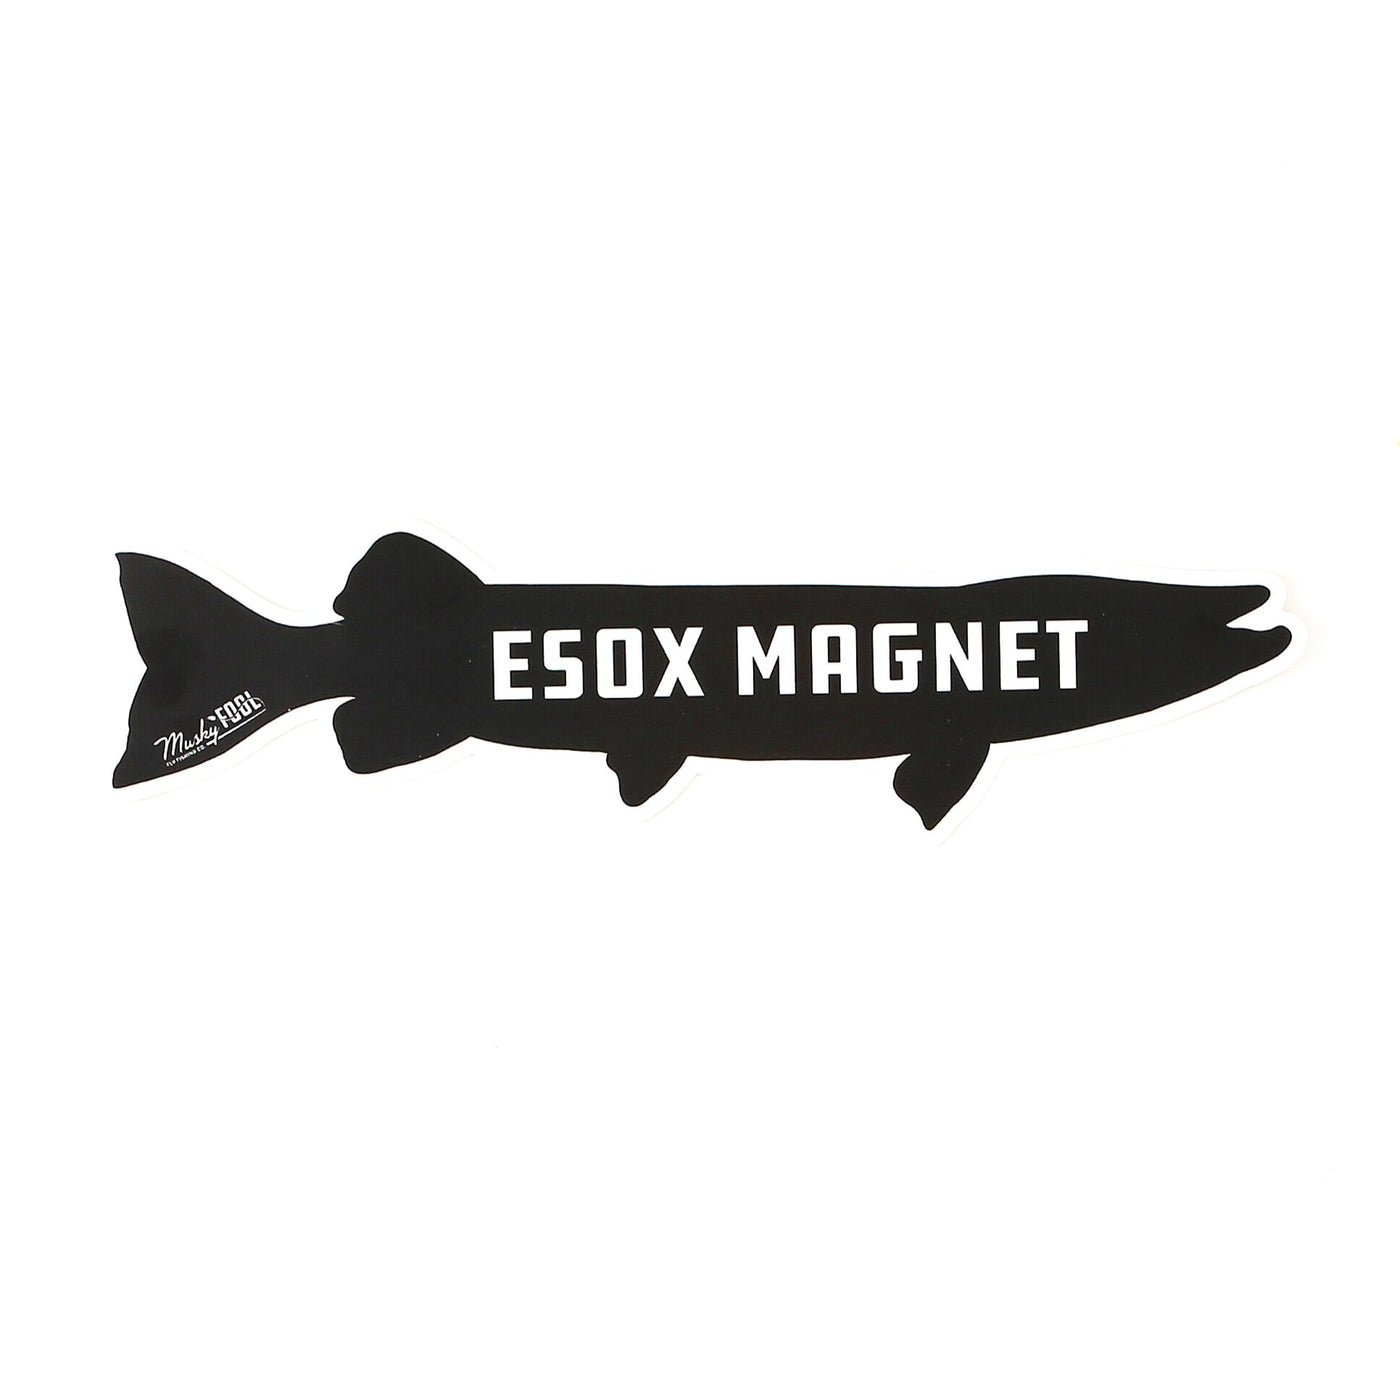 Musky Fool "Esox Magnet" Sticker